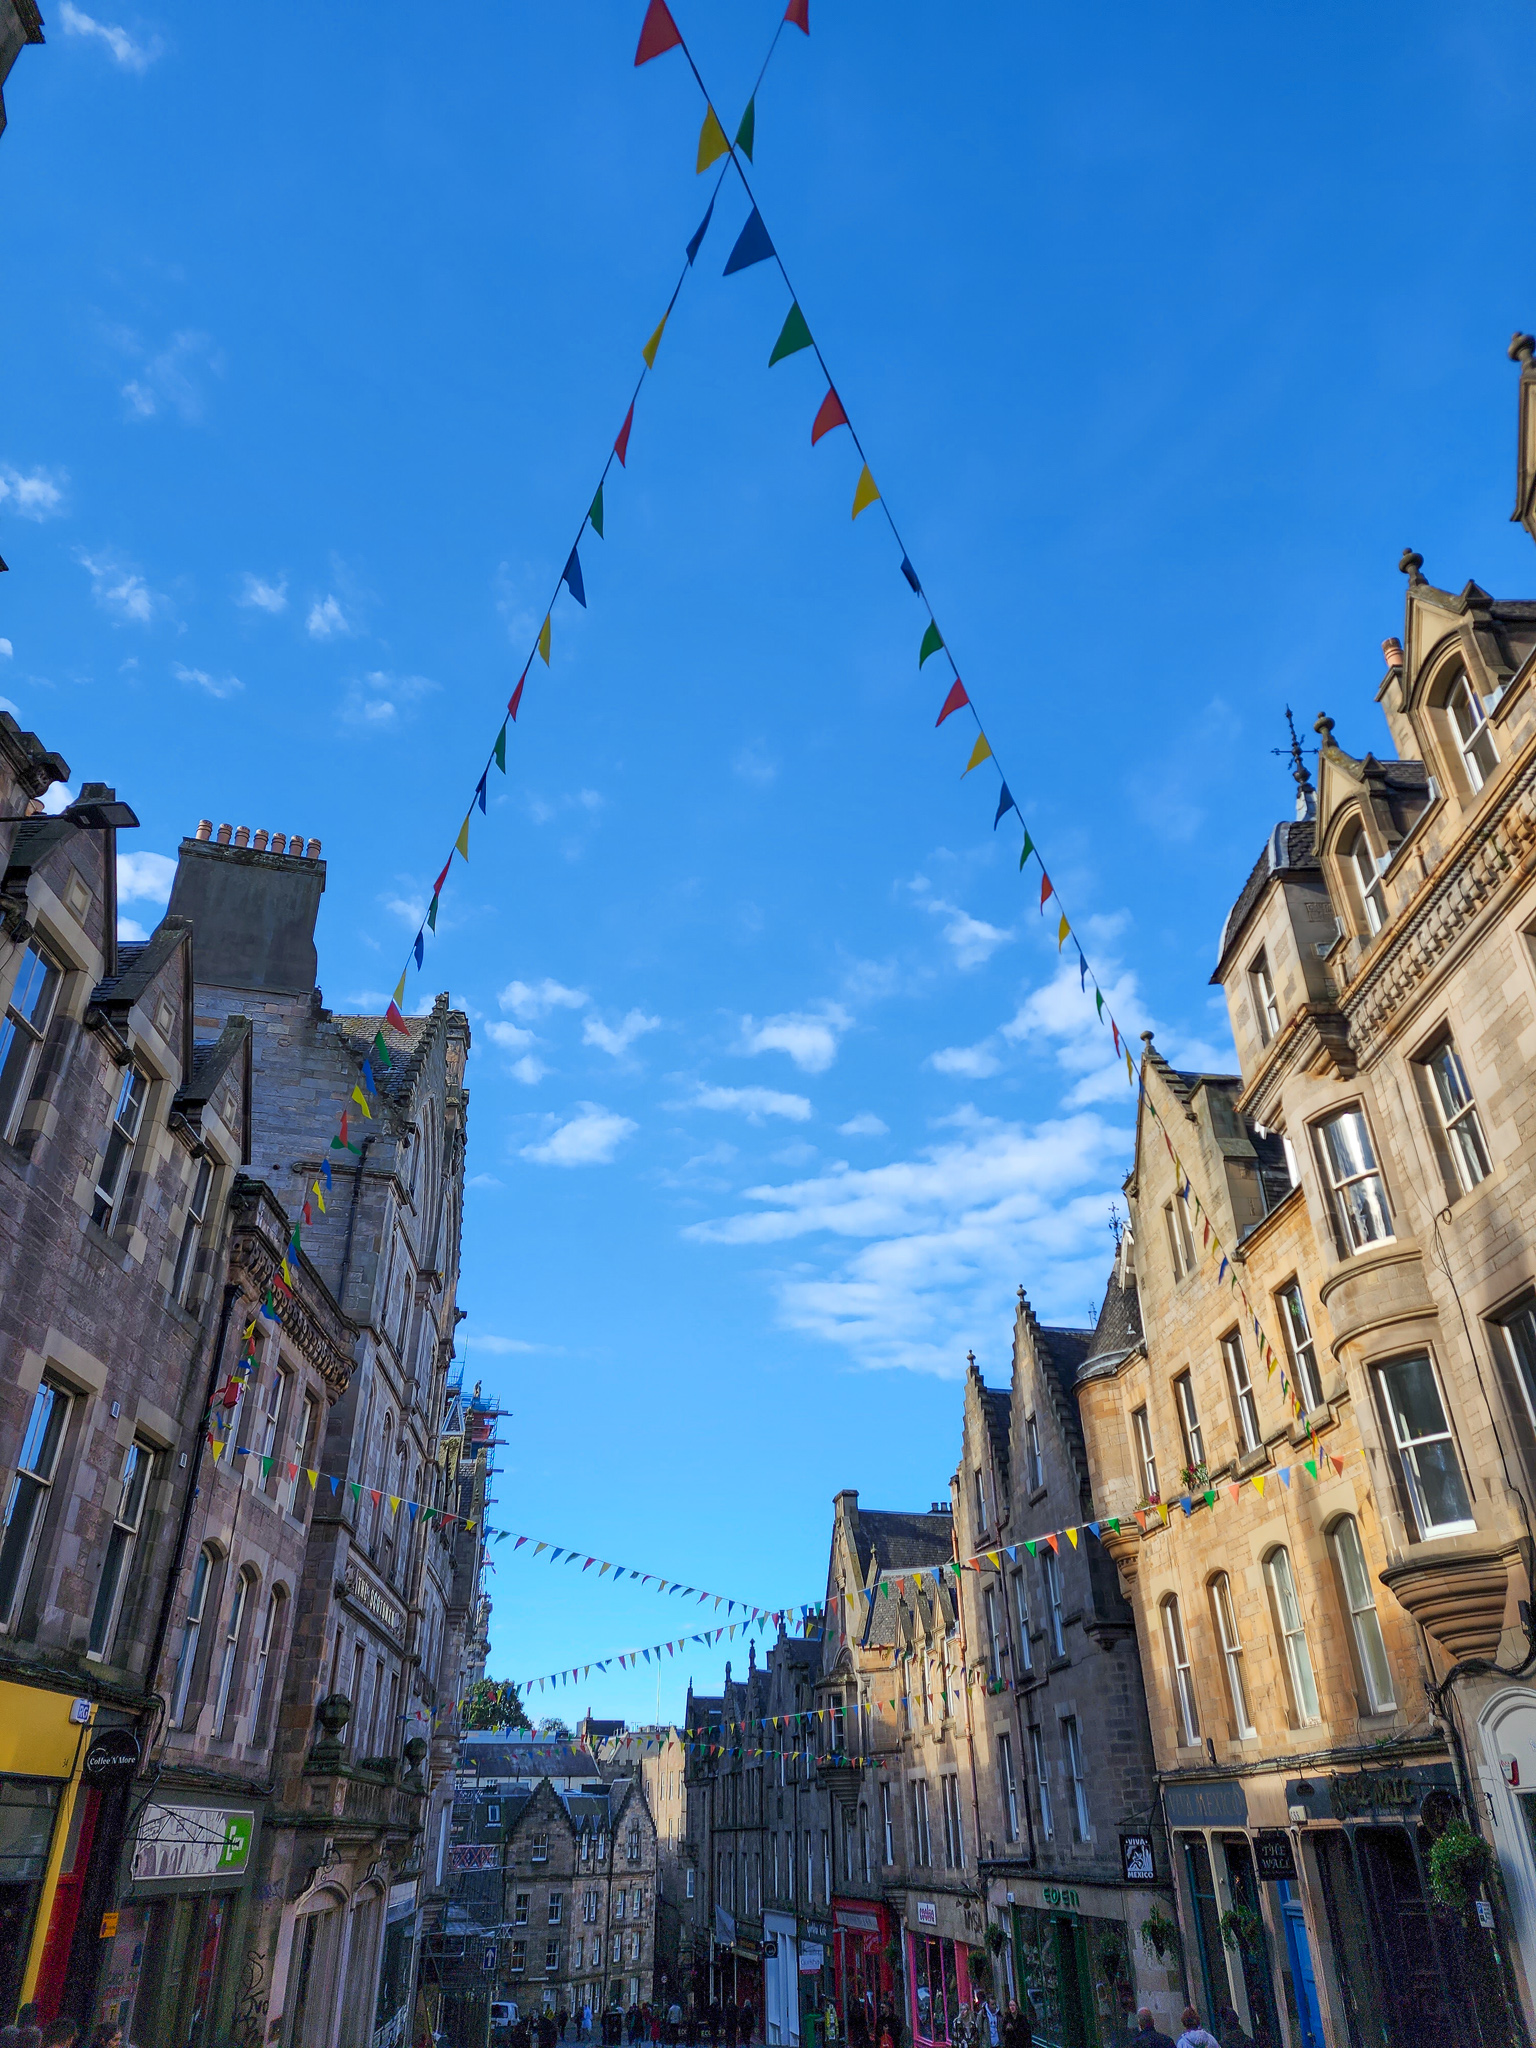 Edinburgh Old Town streets